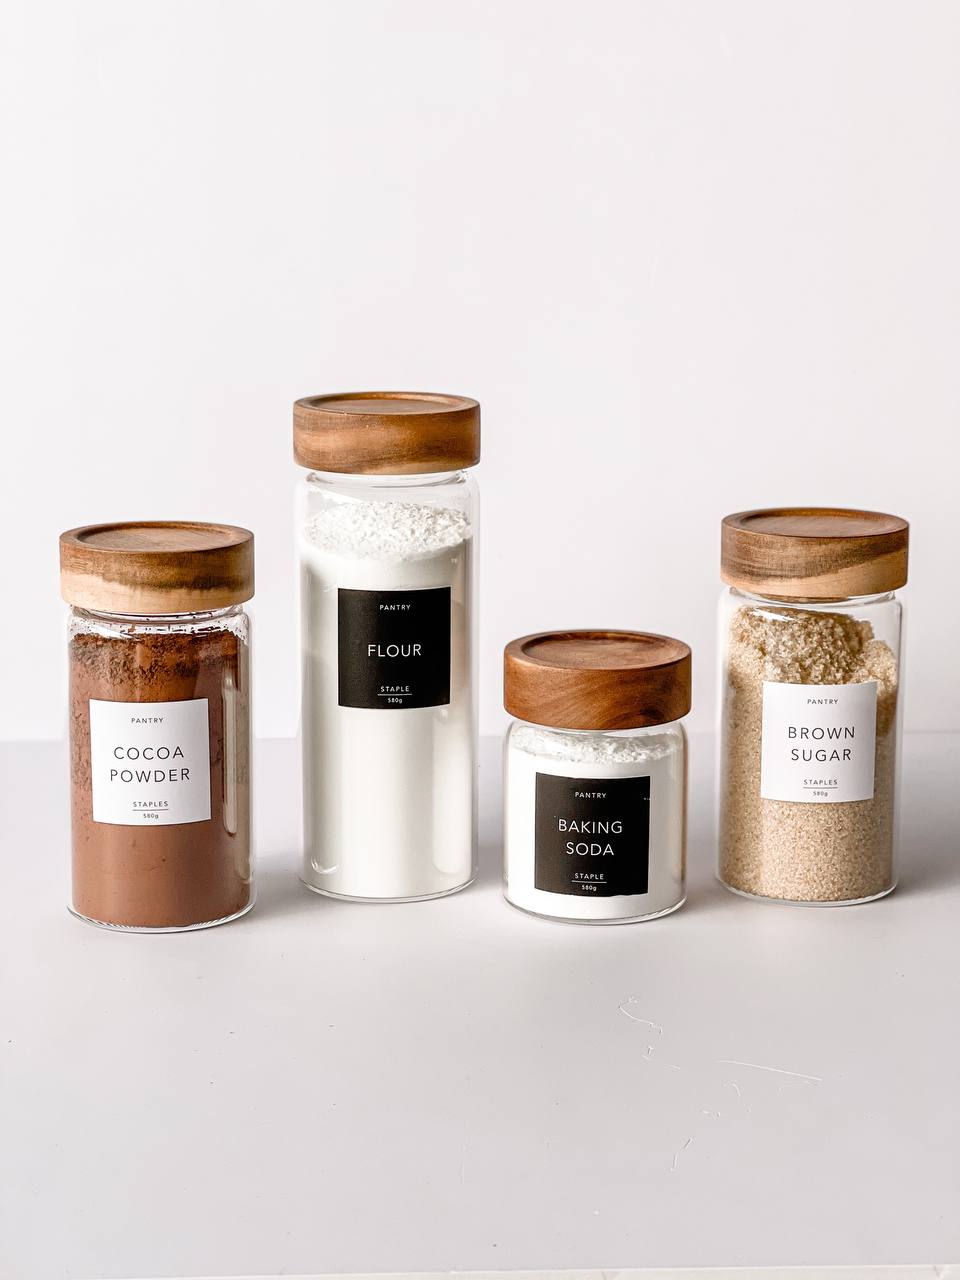 Acacia Riser  Spice jar set, Spice jars, Spice labels